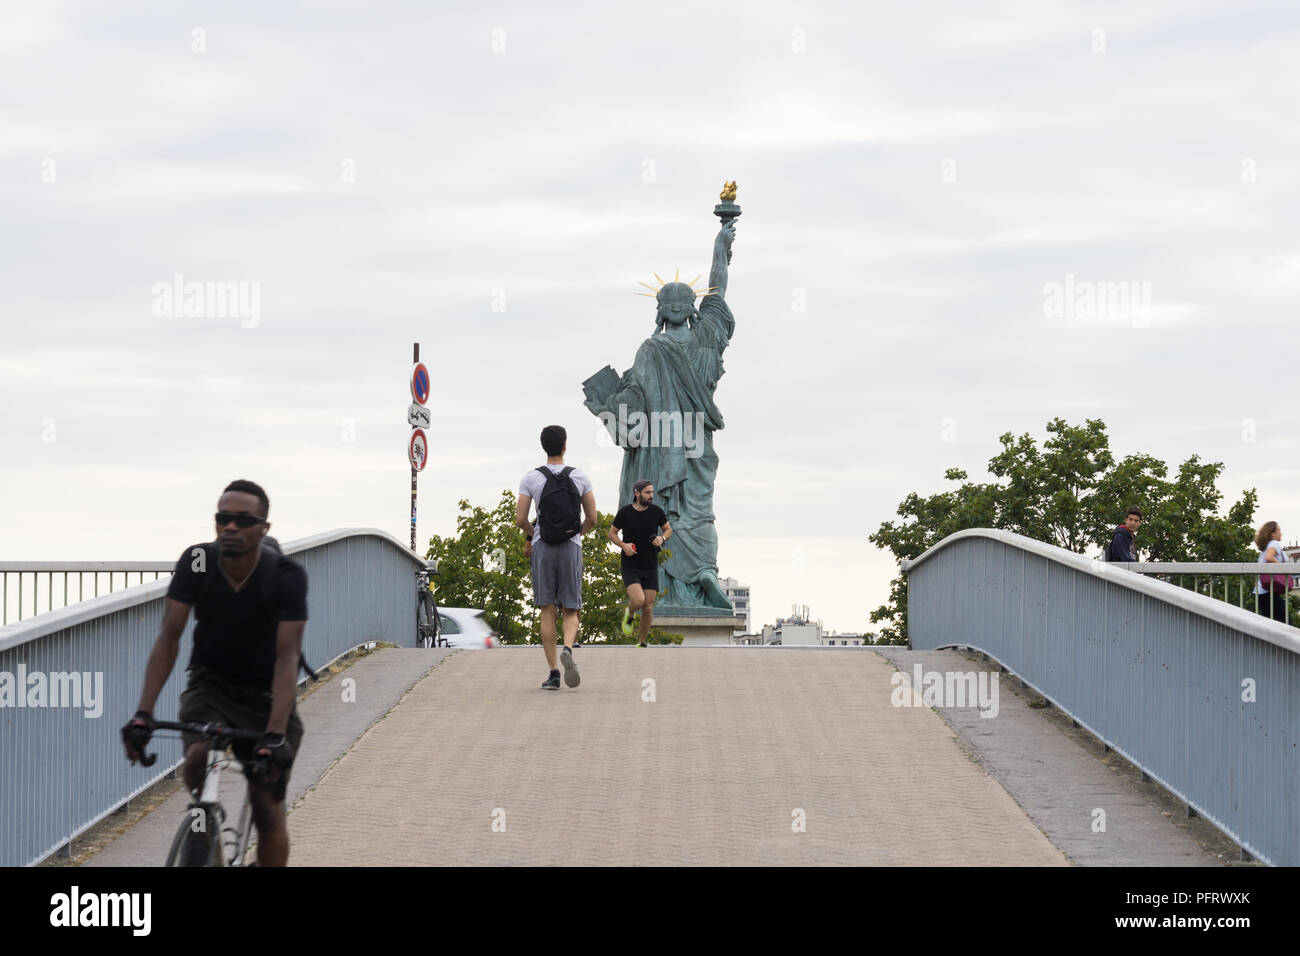 Paris street scene - A scene on Pont de Grenelle - men passing the Statue of Liberty in Paris, France, Europe. Stock Photo